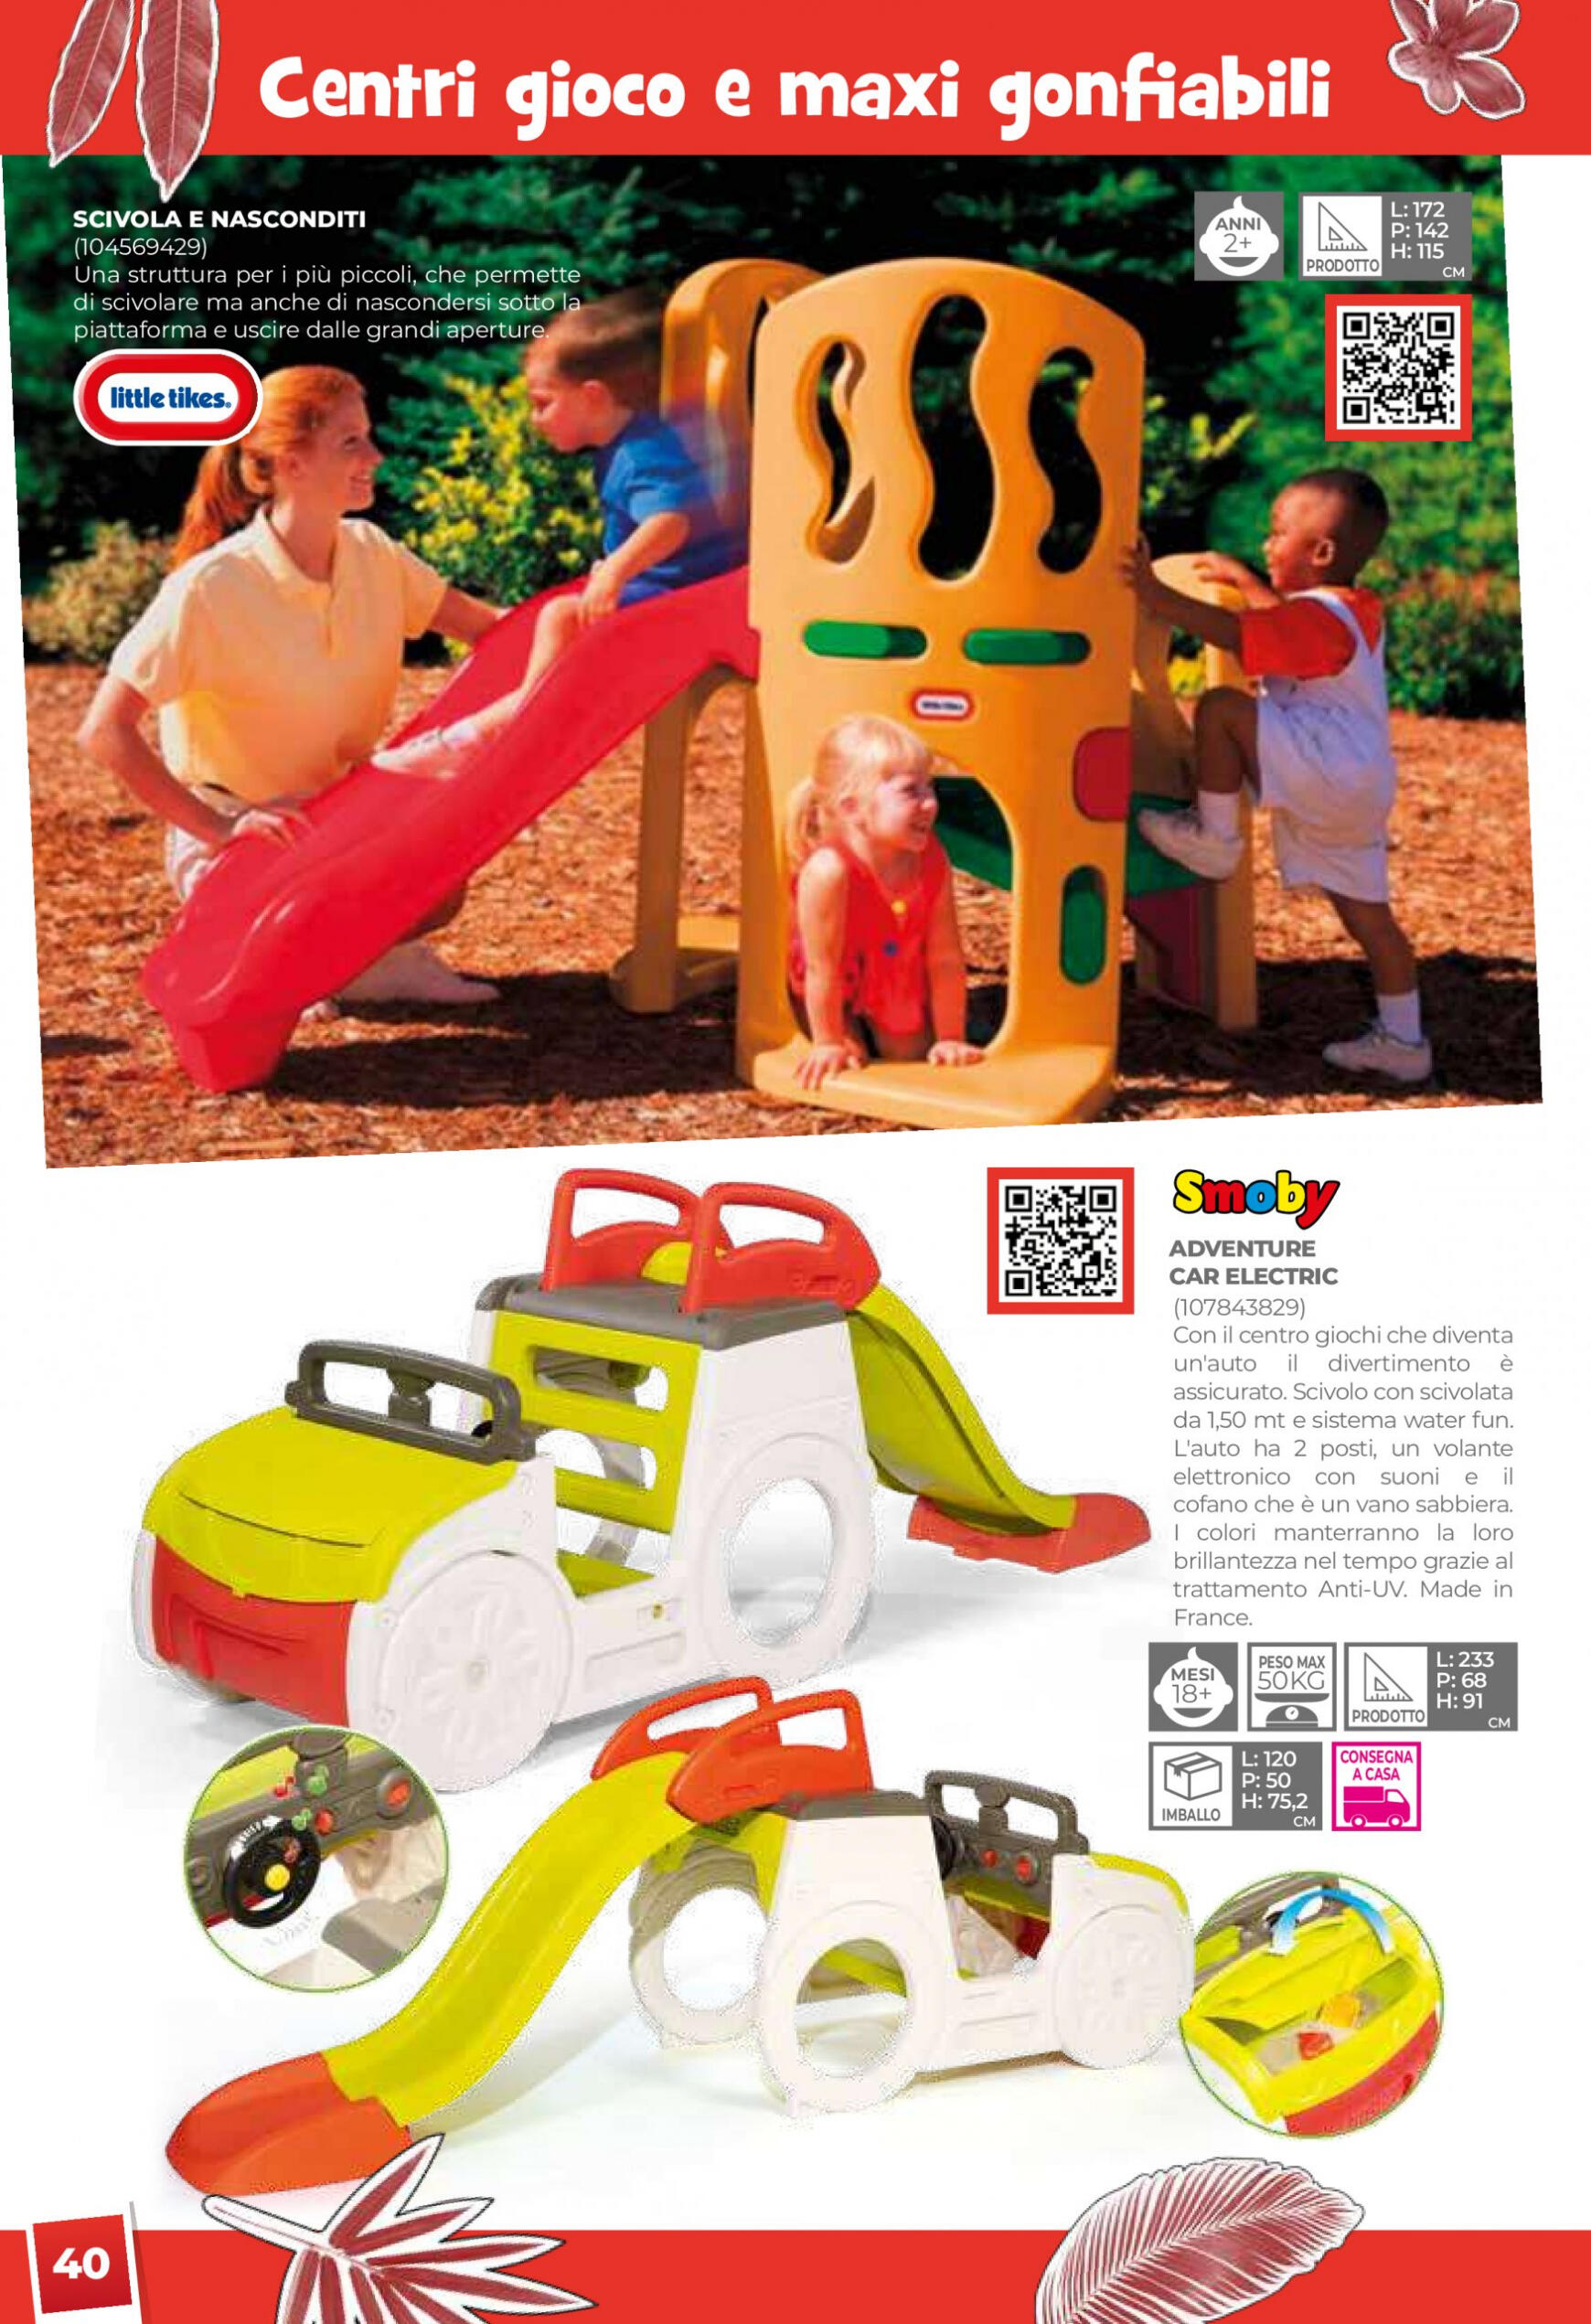 toys-center - Nuovo volantino Toys Center 01.05. - 31.12. - page: 42